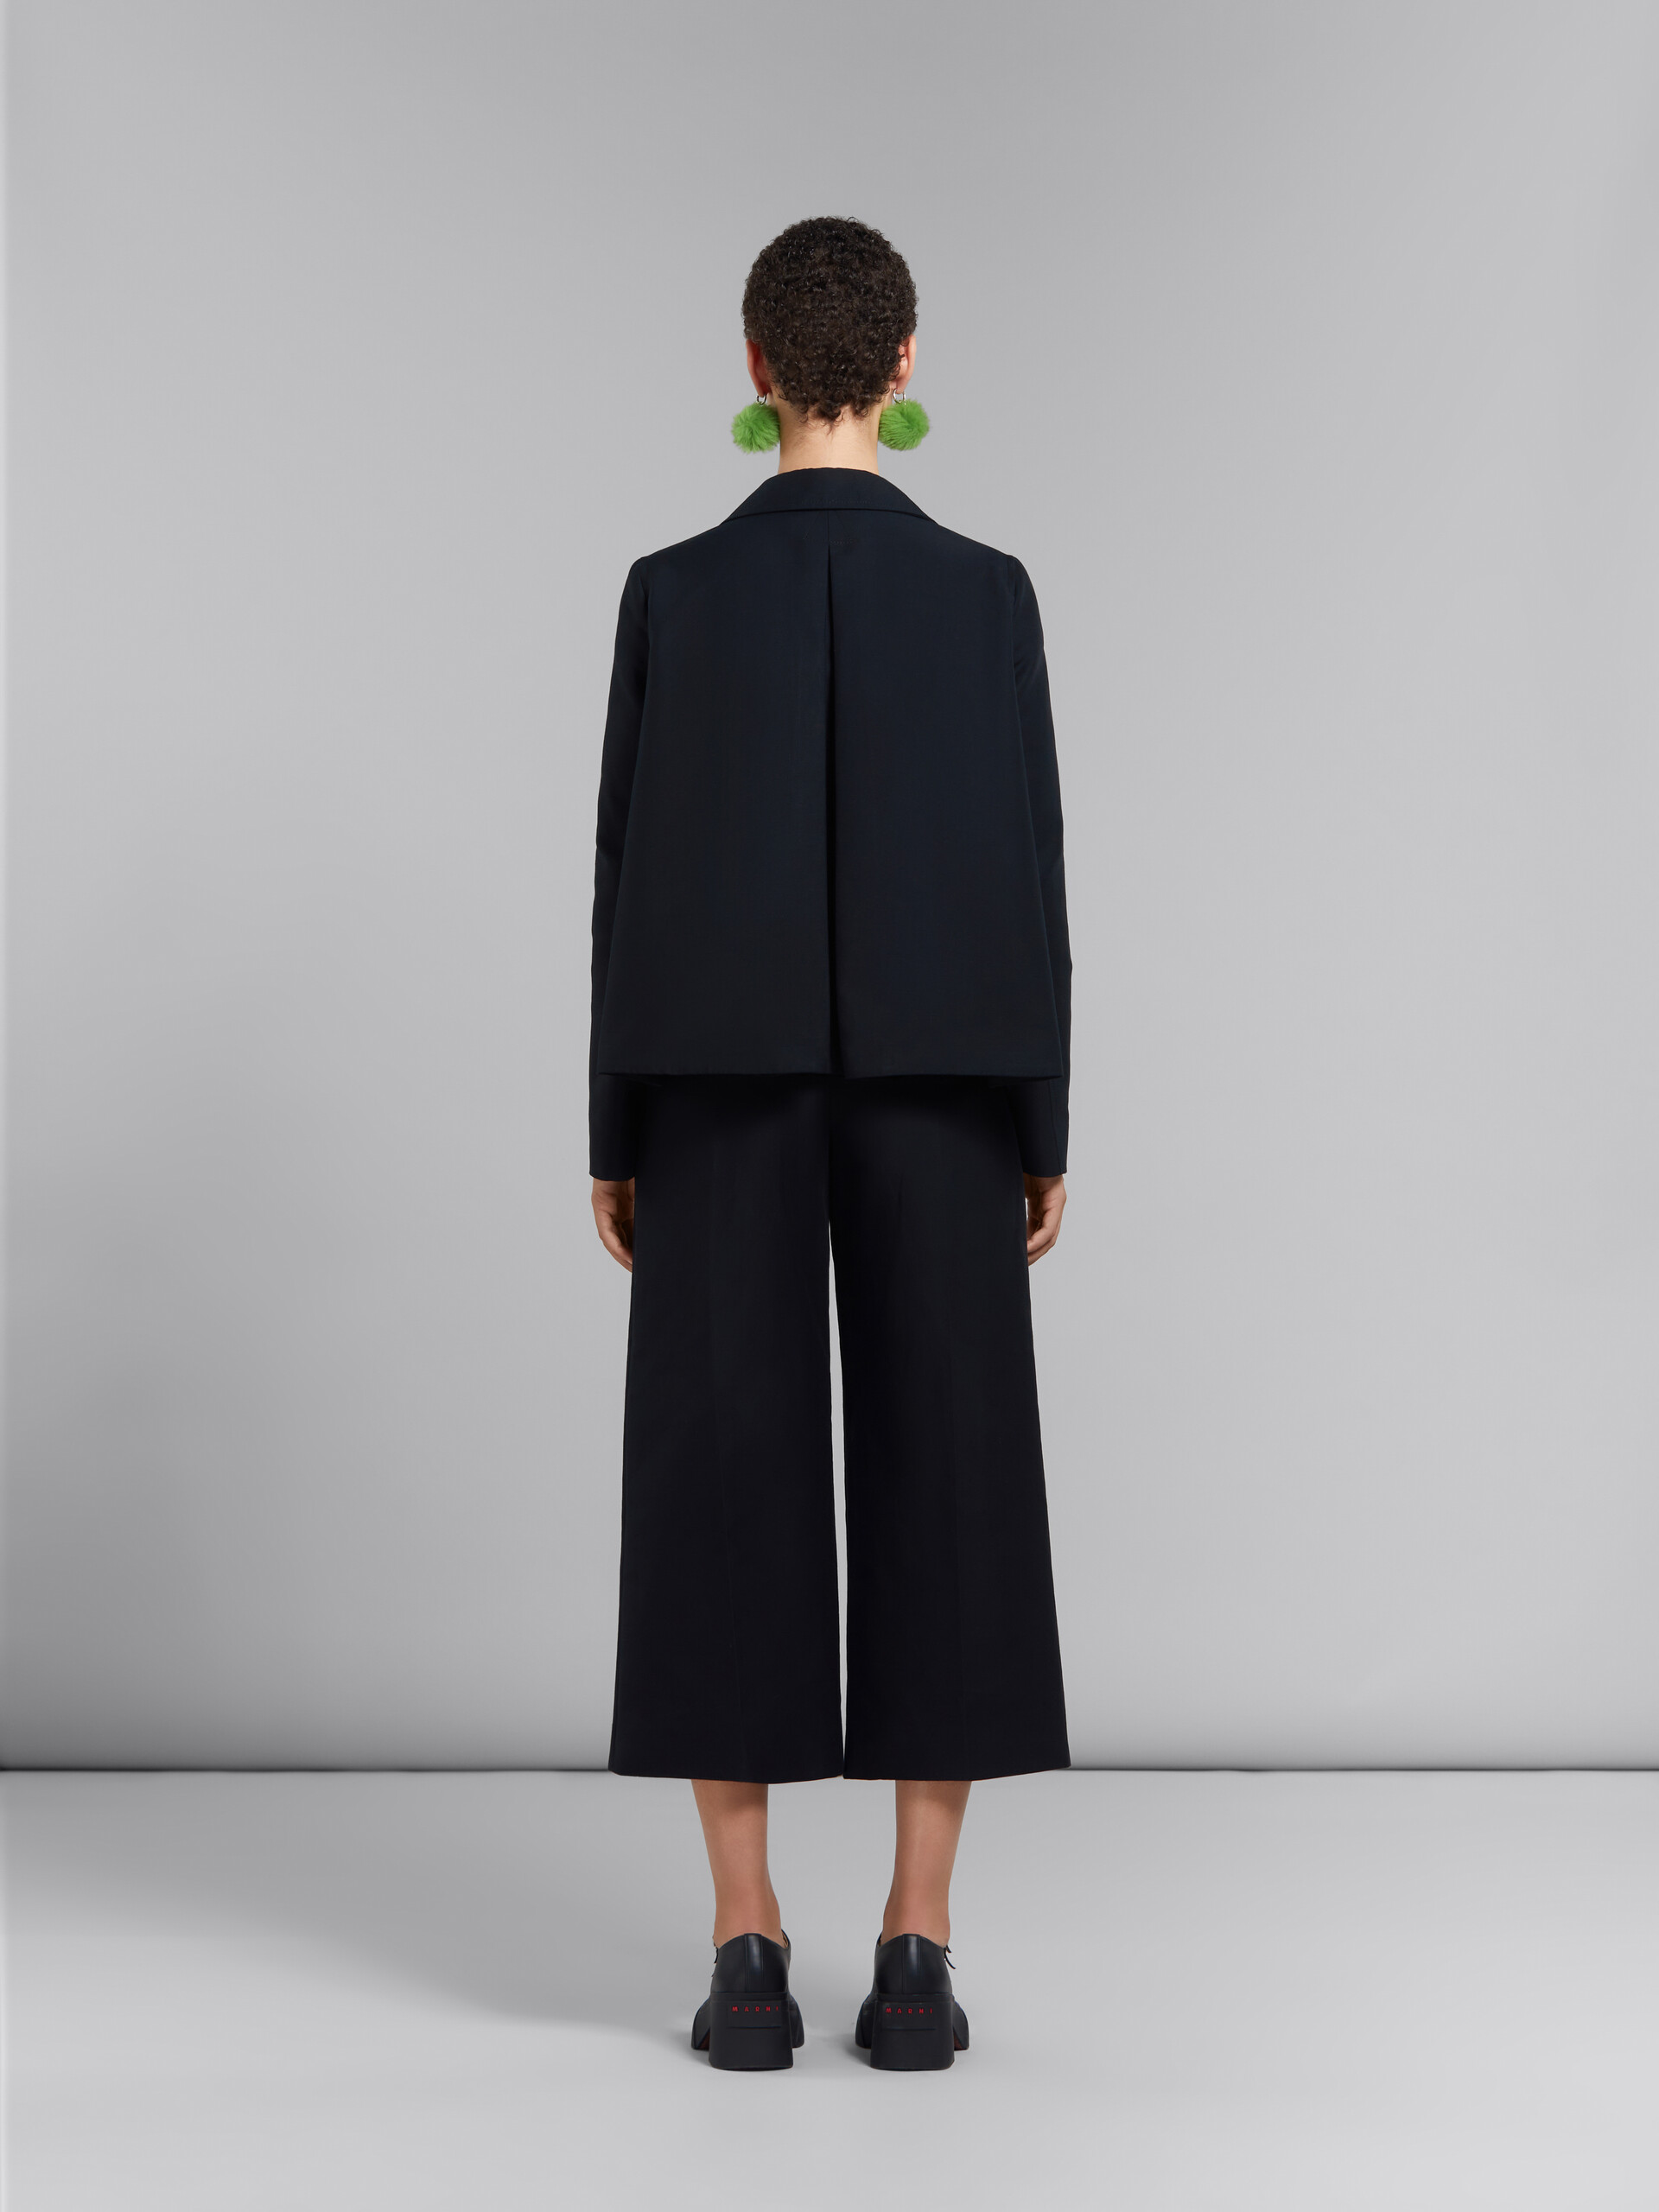 Schwarze kurz geschnittene Hose aus Cady - Hosen - Image 3